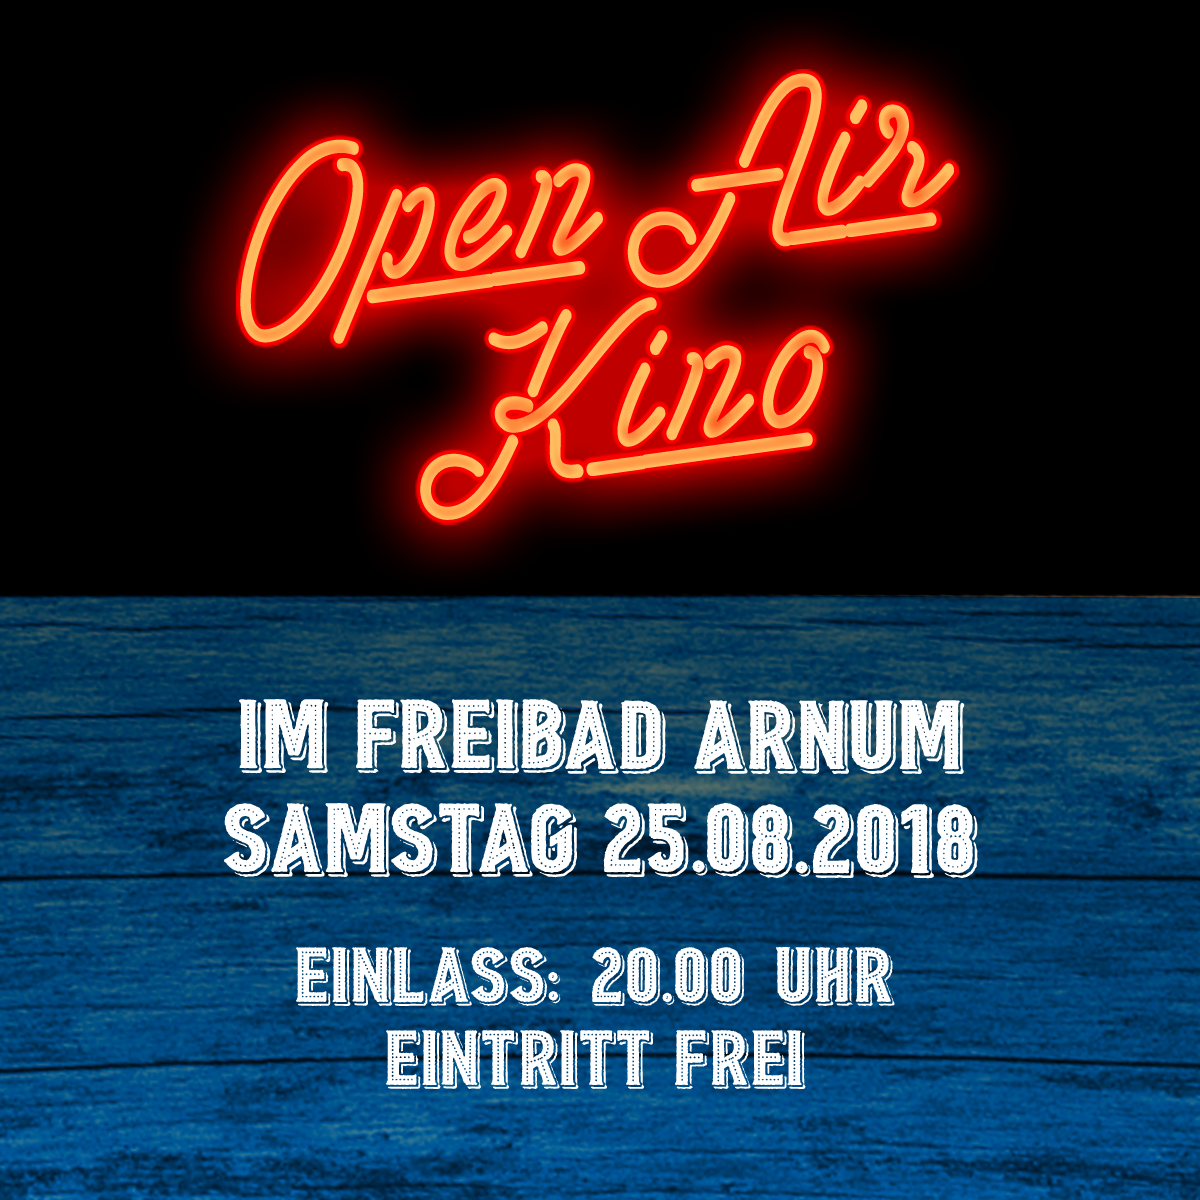 25.08.2018: Open-Air-Kino im Freibad Arnum